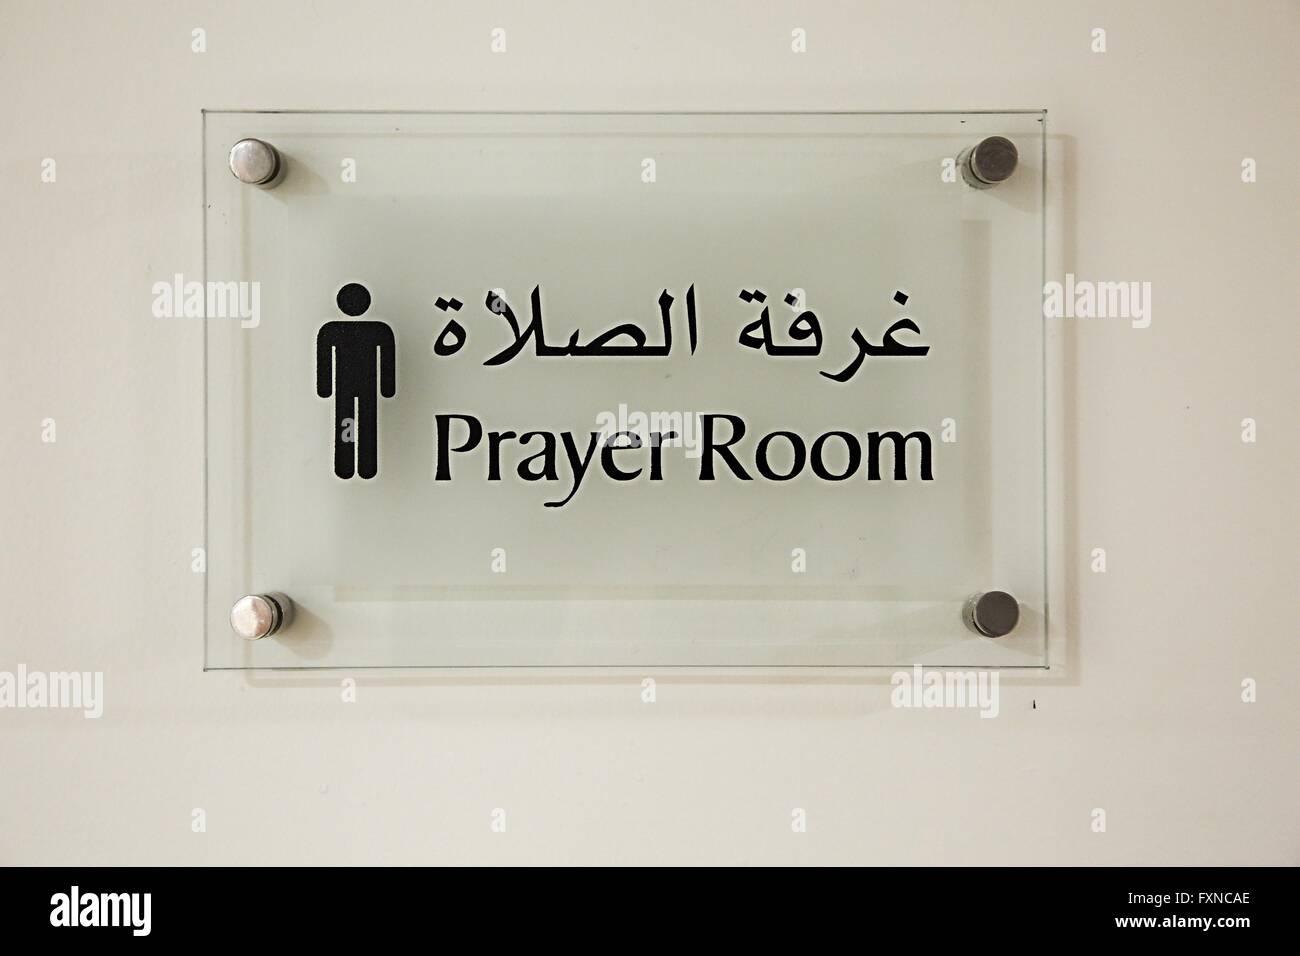 Prayer room sign Stock Photo